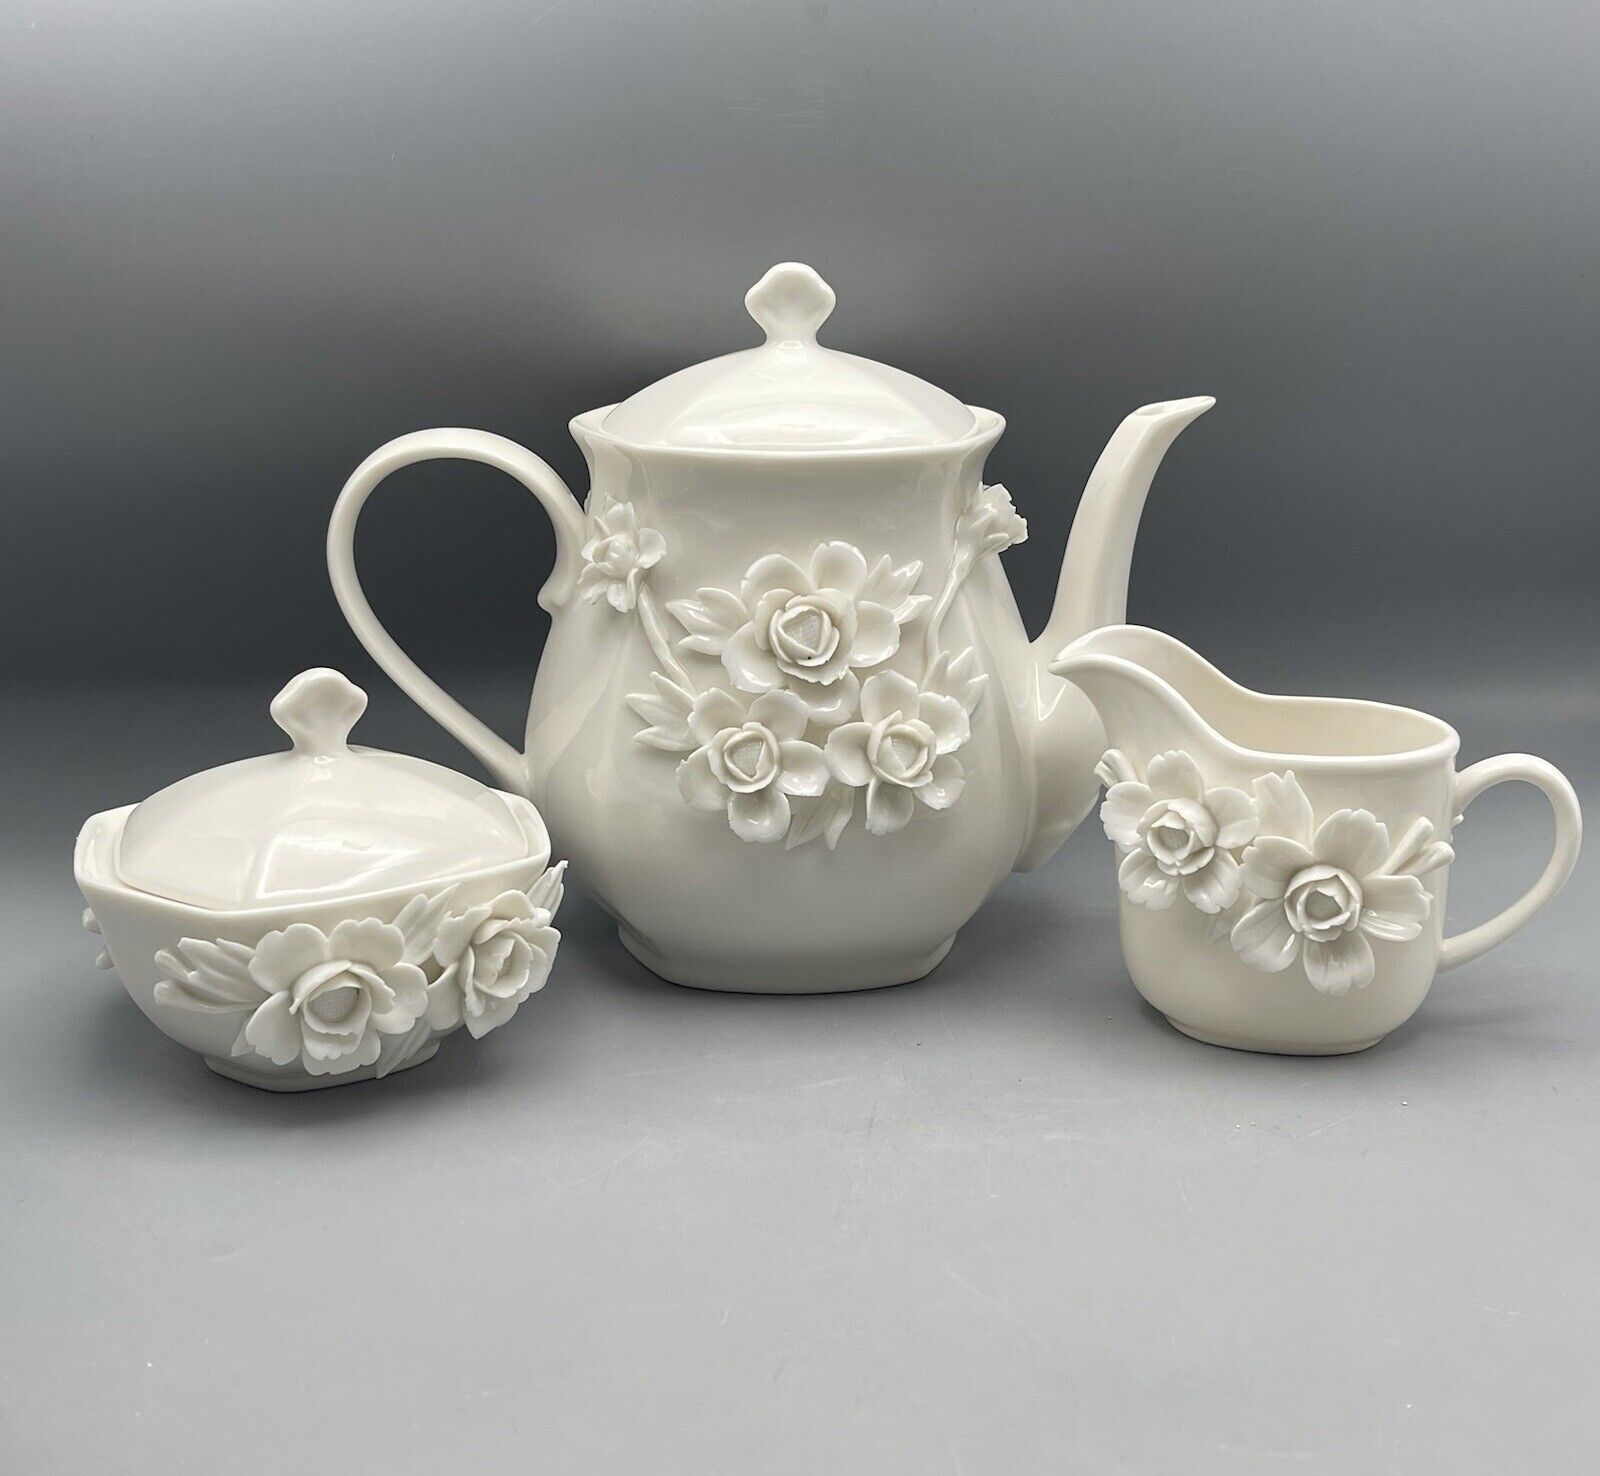 Vintage Godinger White Porcelain Rosemary Teapot Tea Set with Applied Flowers